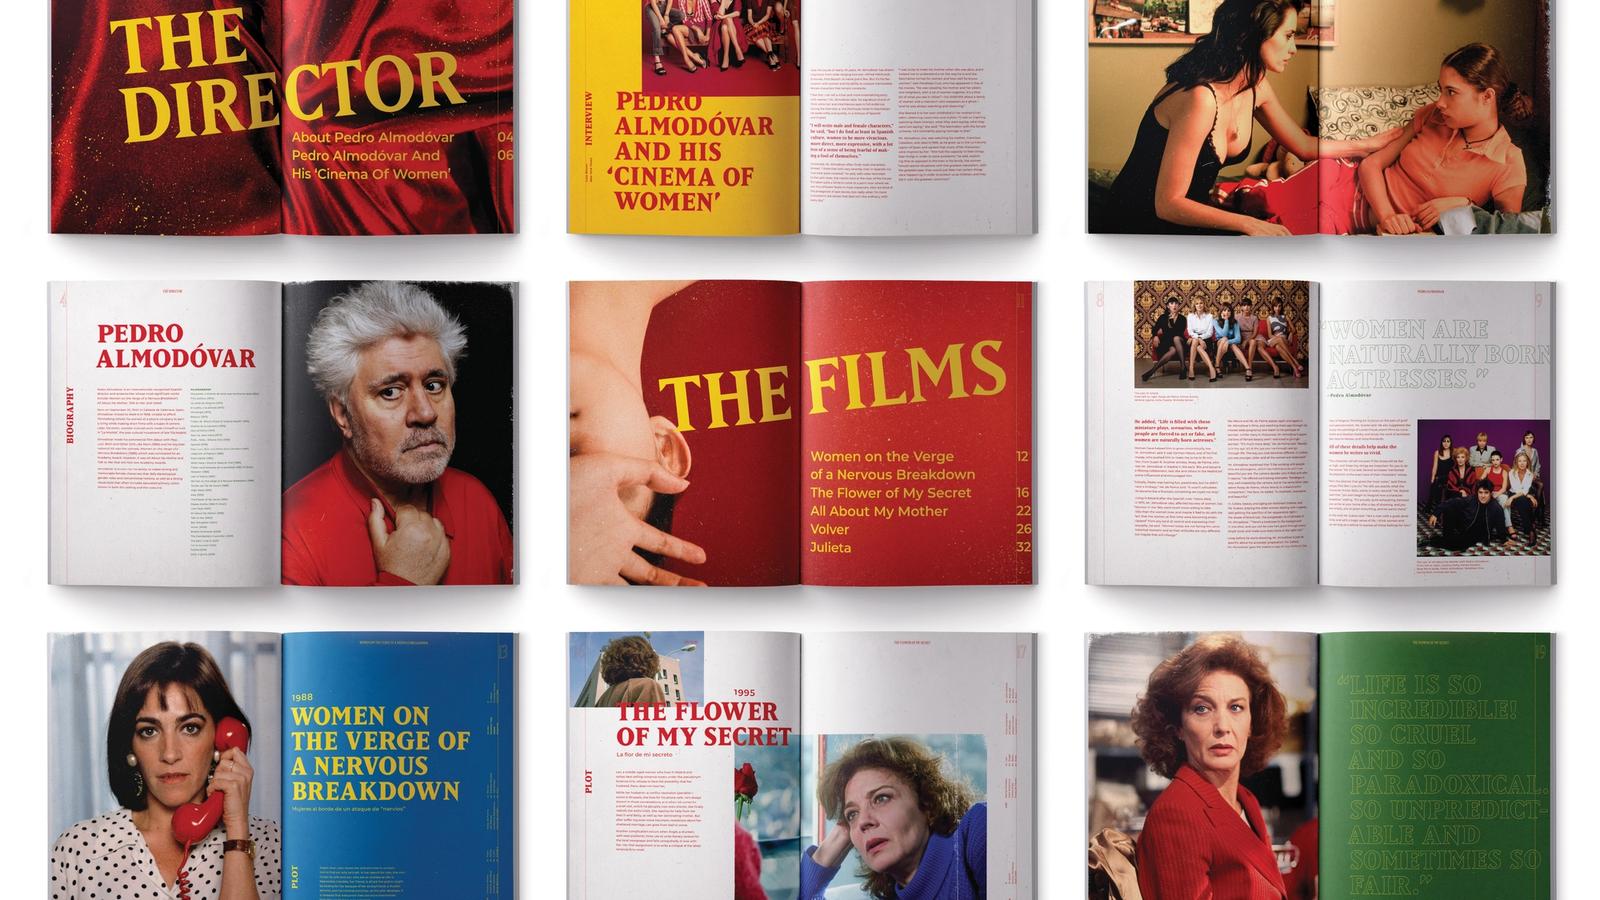 Pedro Almodóvar Film Festival materials